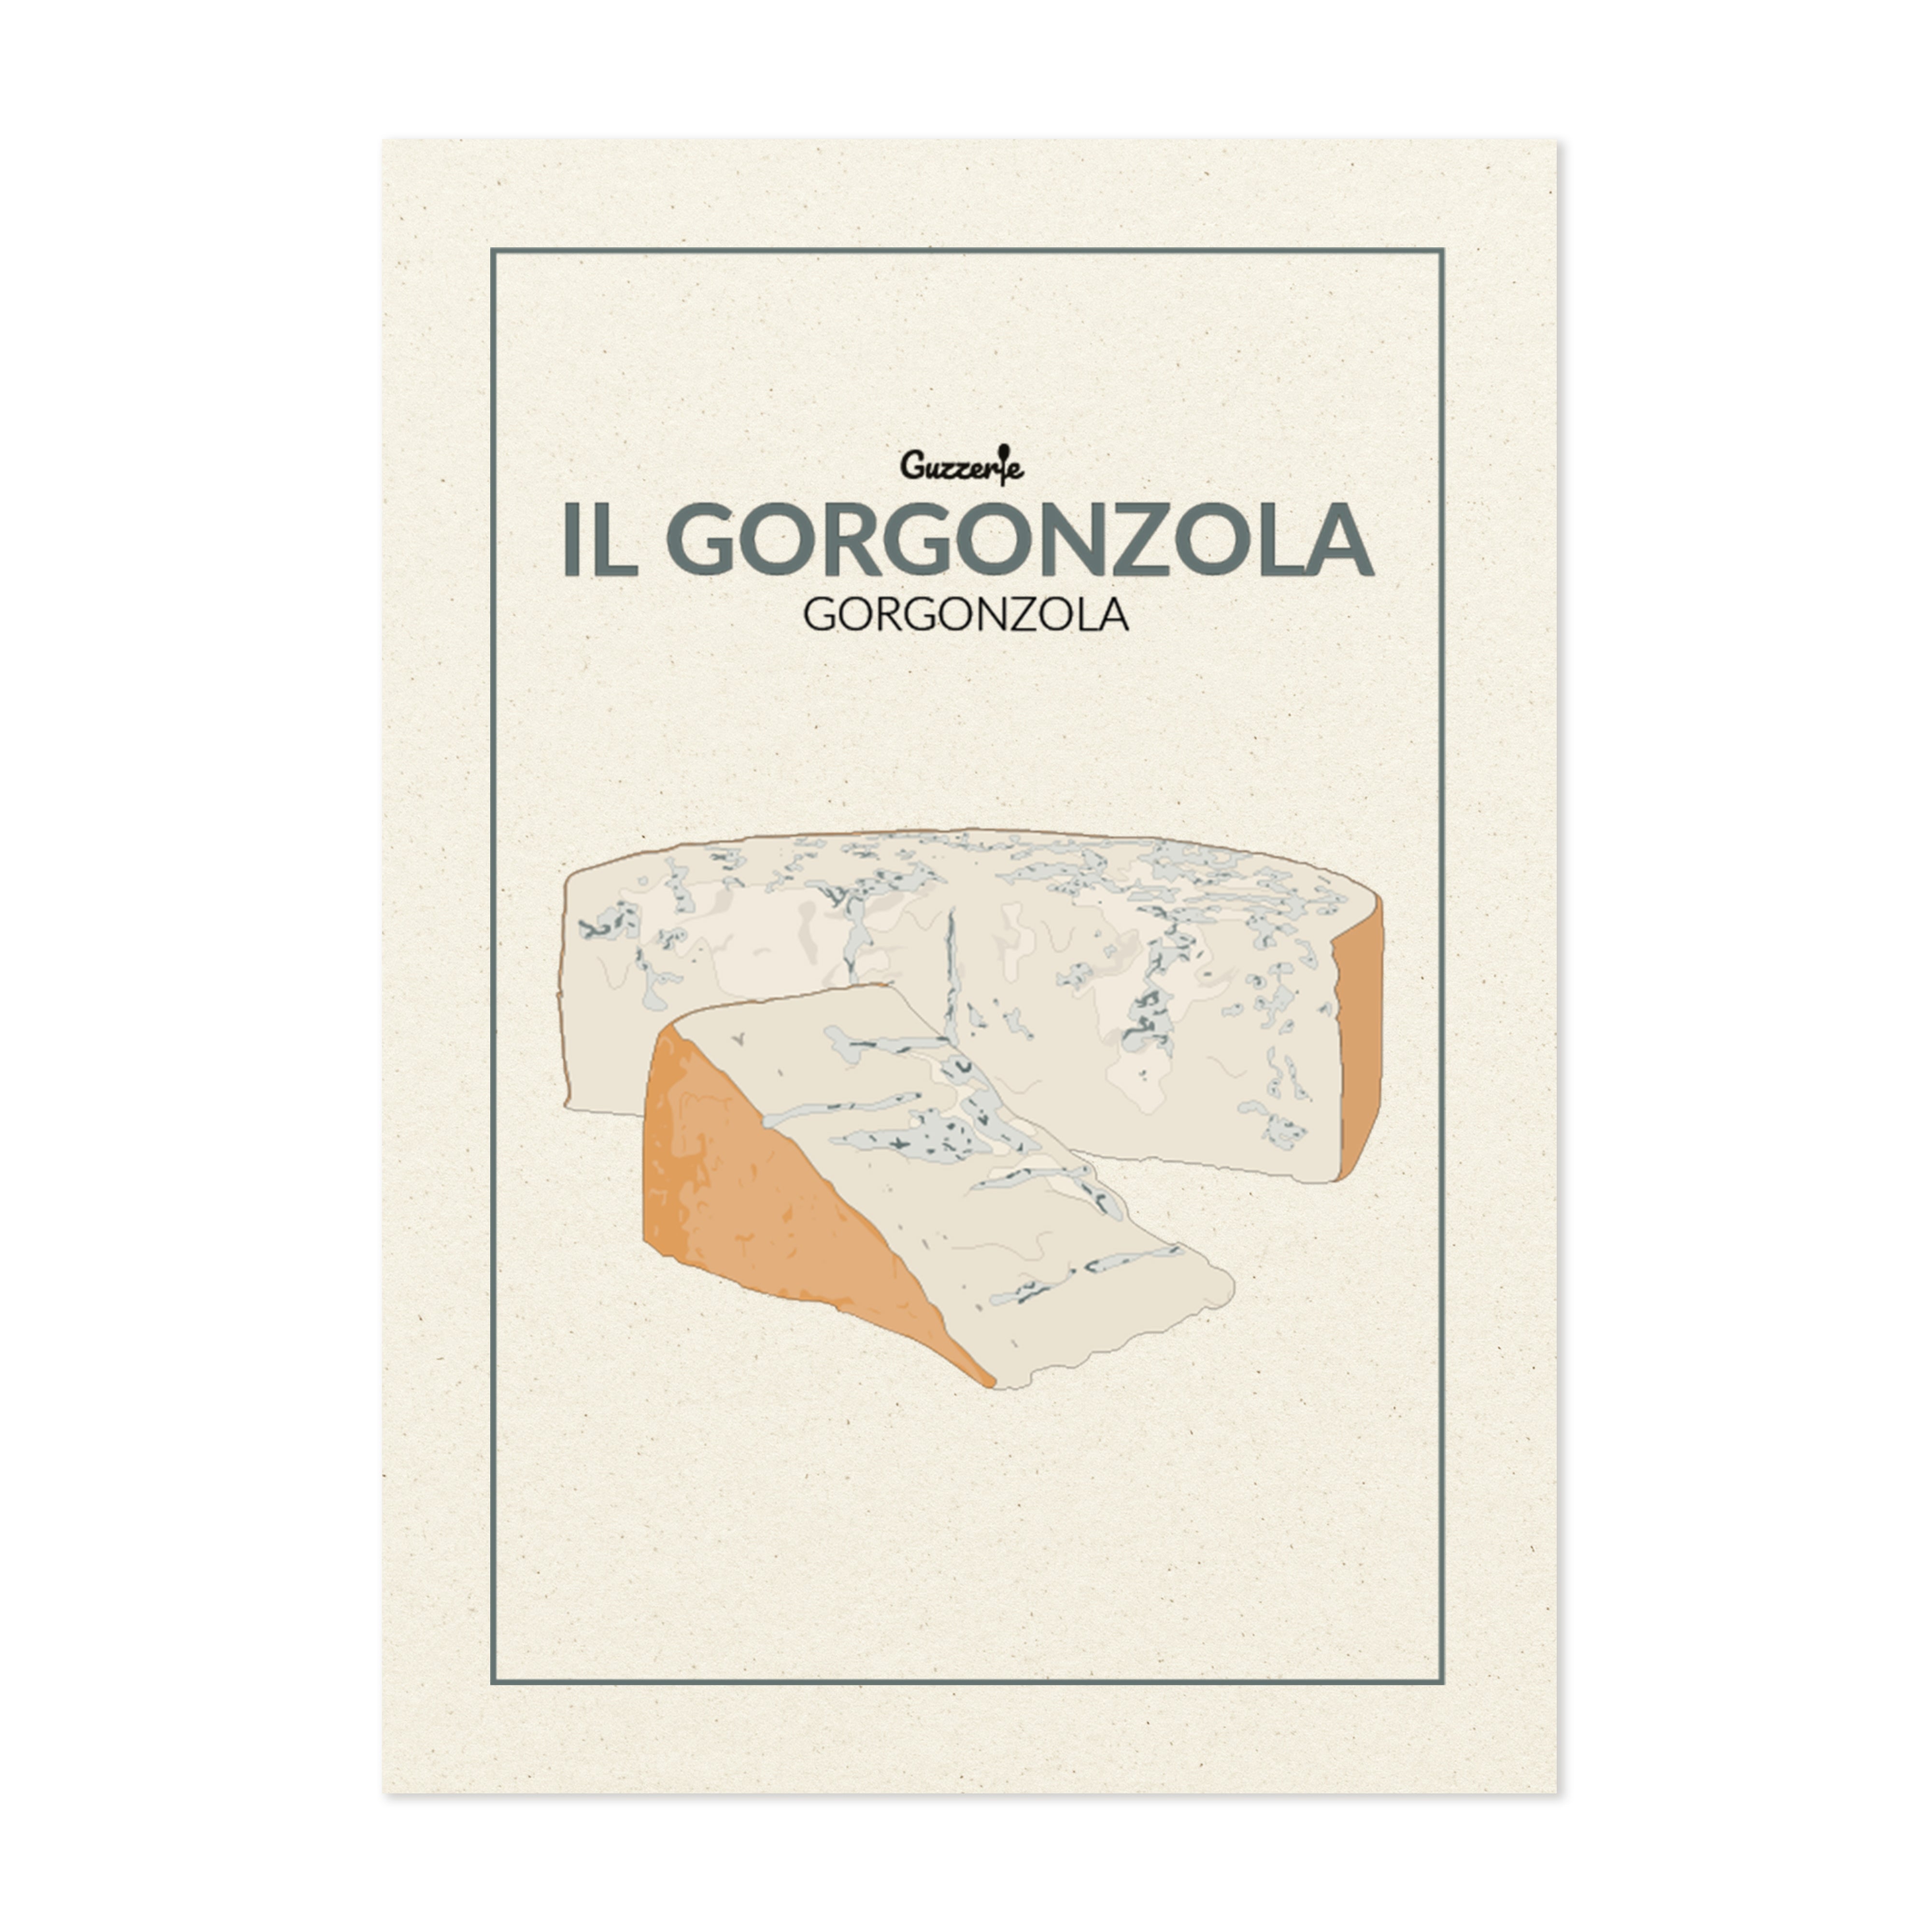 Il Gorgonzola